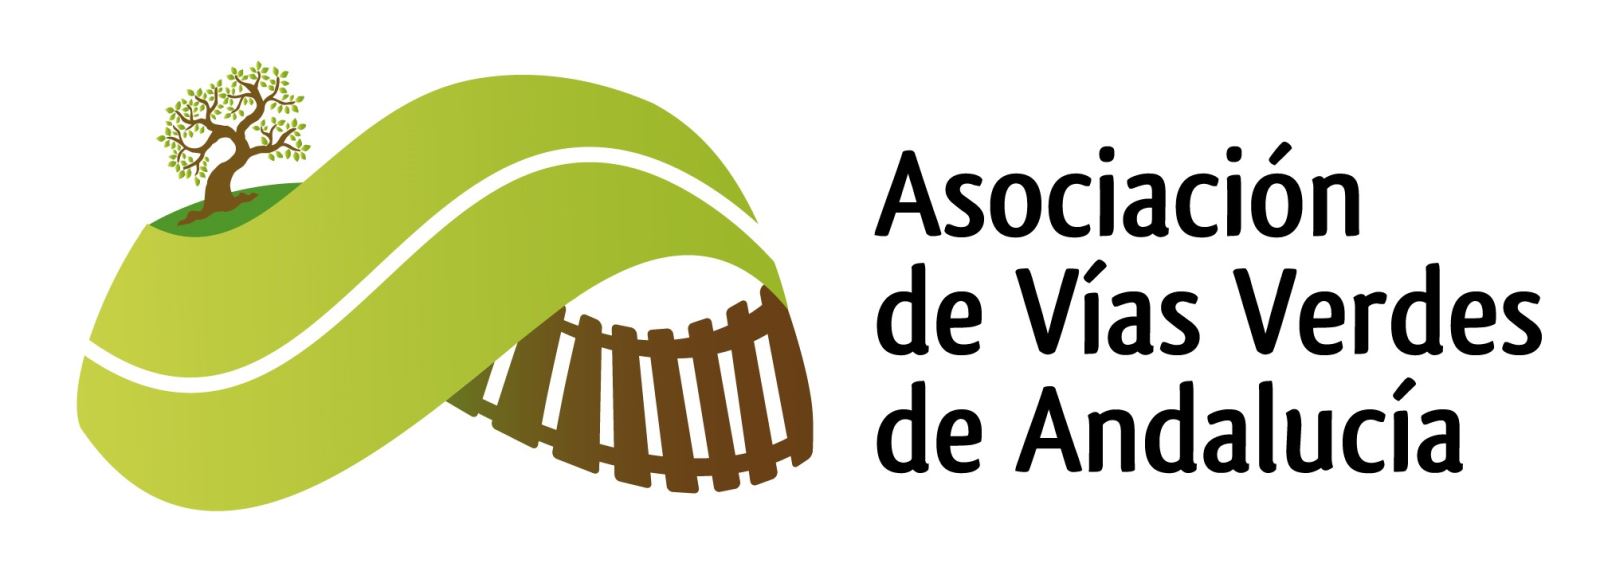 Logo Asociacin de las Vas Verdes de Andaluca